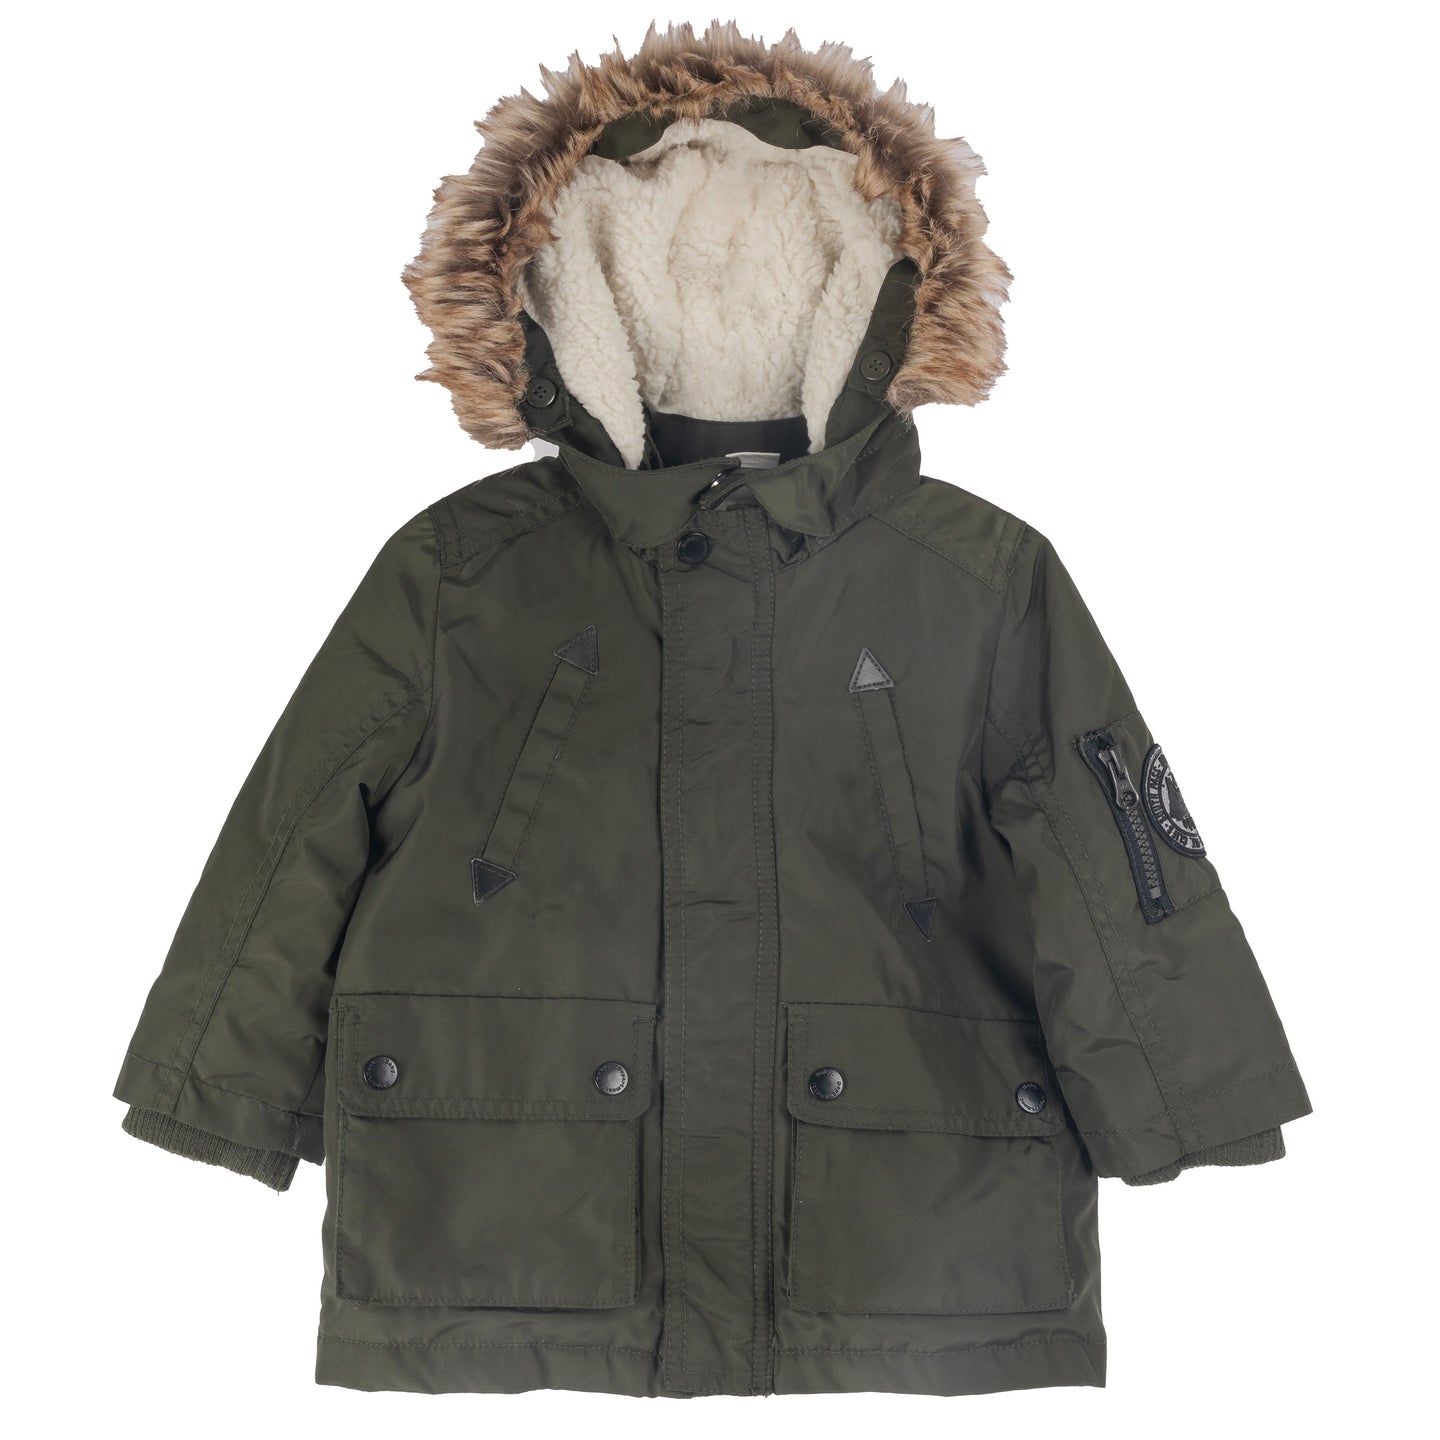 [9-12m] H&M Khaki Faux Fur Hooded Fleece lined Parka